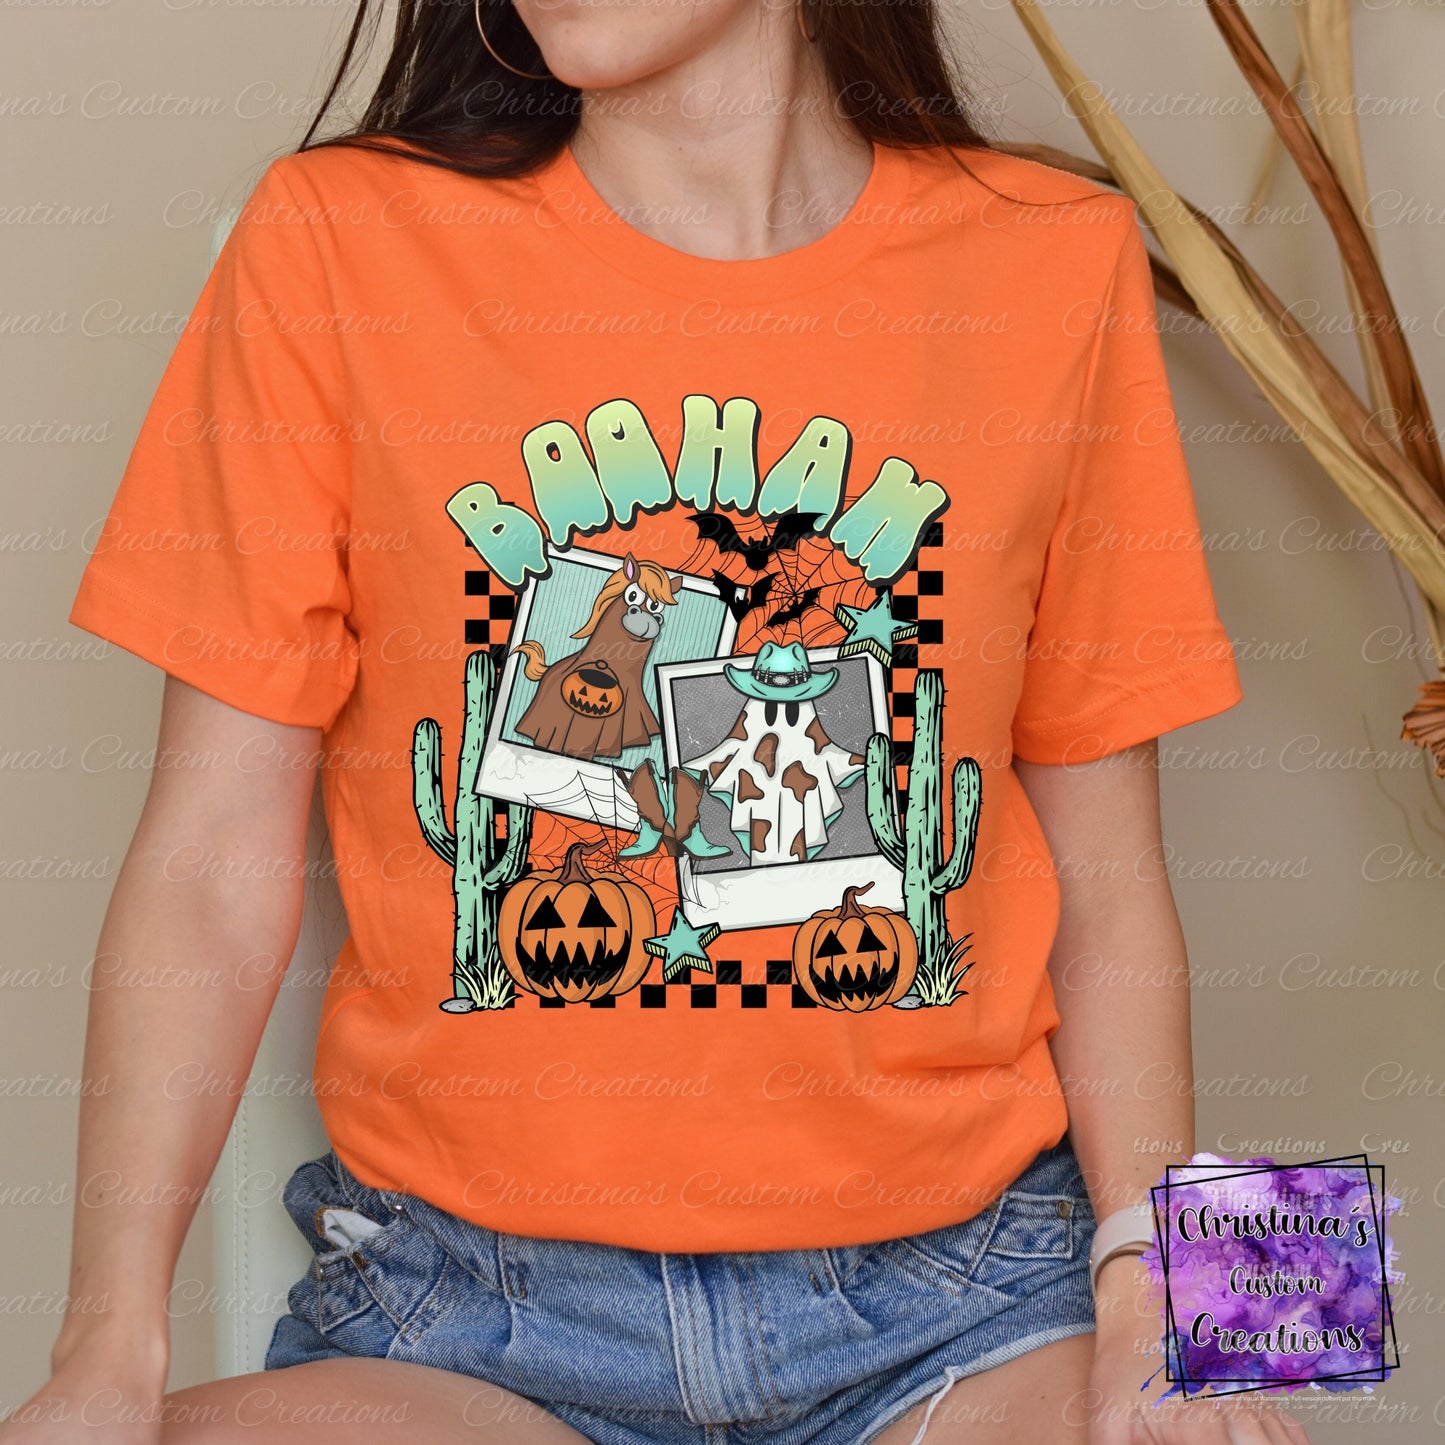 Boohaw Halloween T-Shirt | Trendy Halloween Shirt | Front and Back Shirt | Fast Shipping | Super Soft Shirts for Men/Women/Kid's